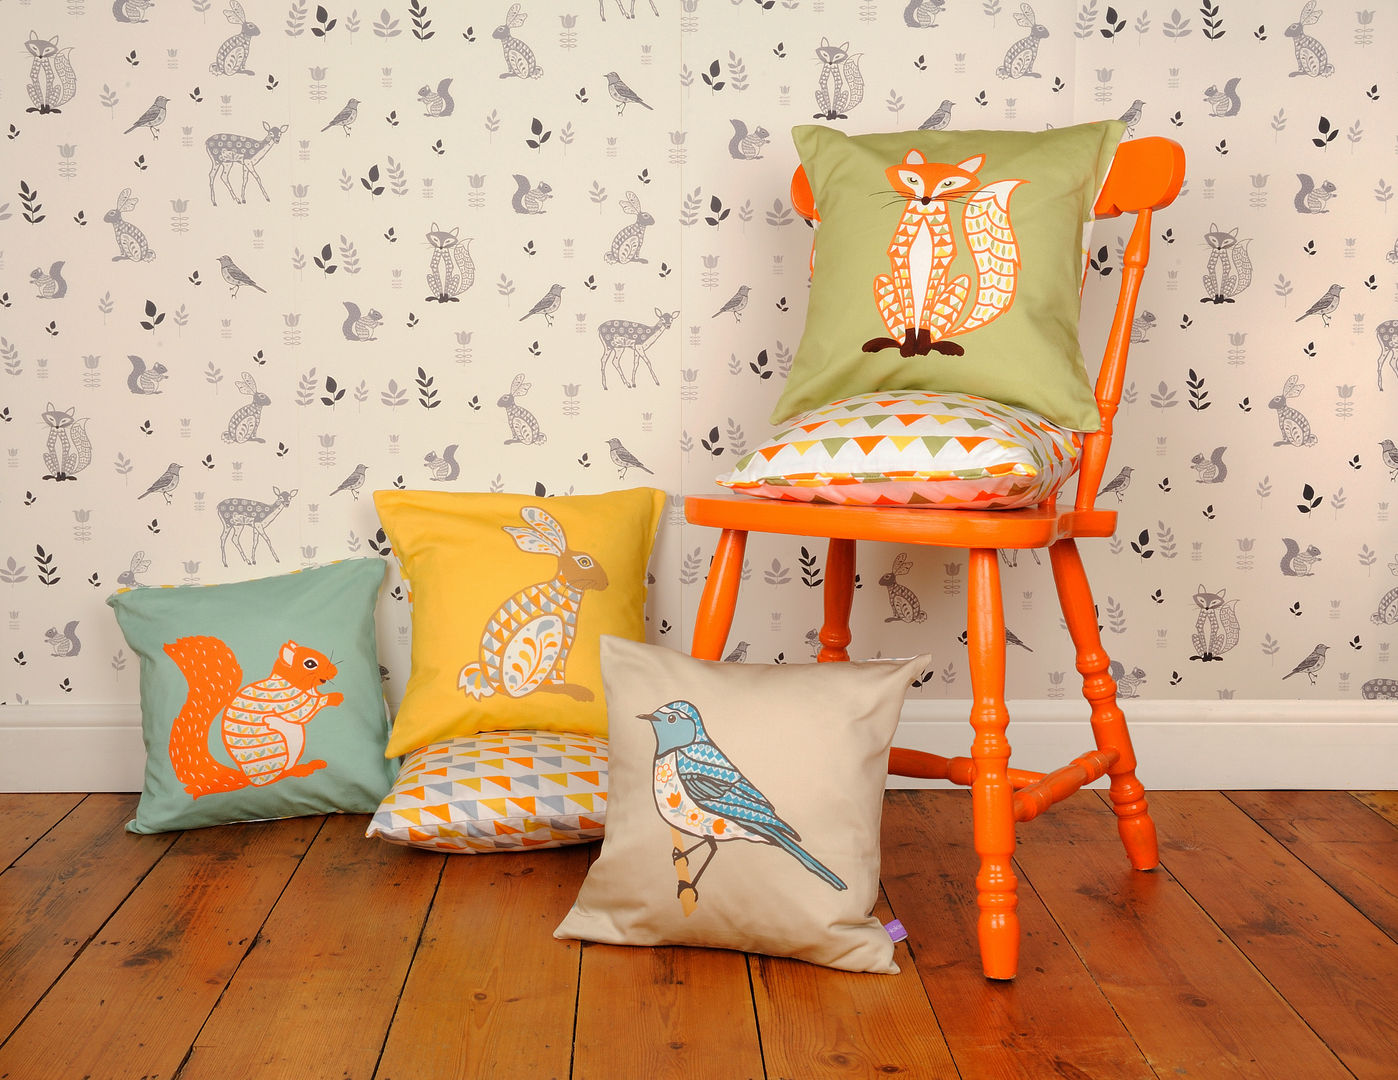 Decorative Animal Cushions and Wallpaper Helen Gordon Scandinavian style bedroom Textiles